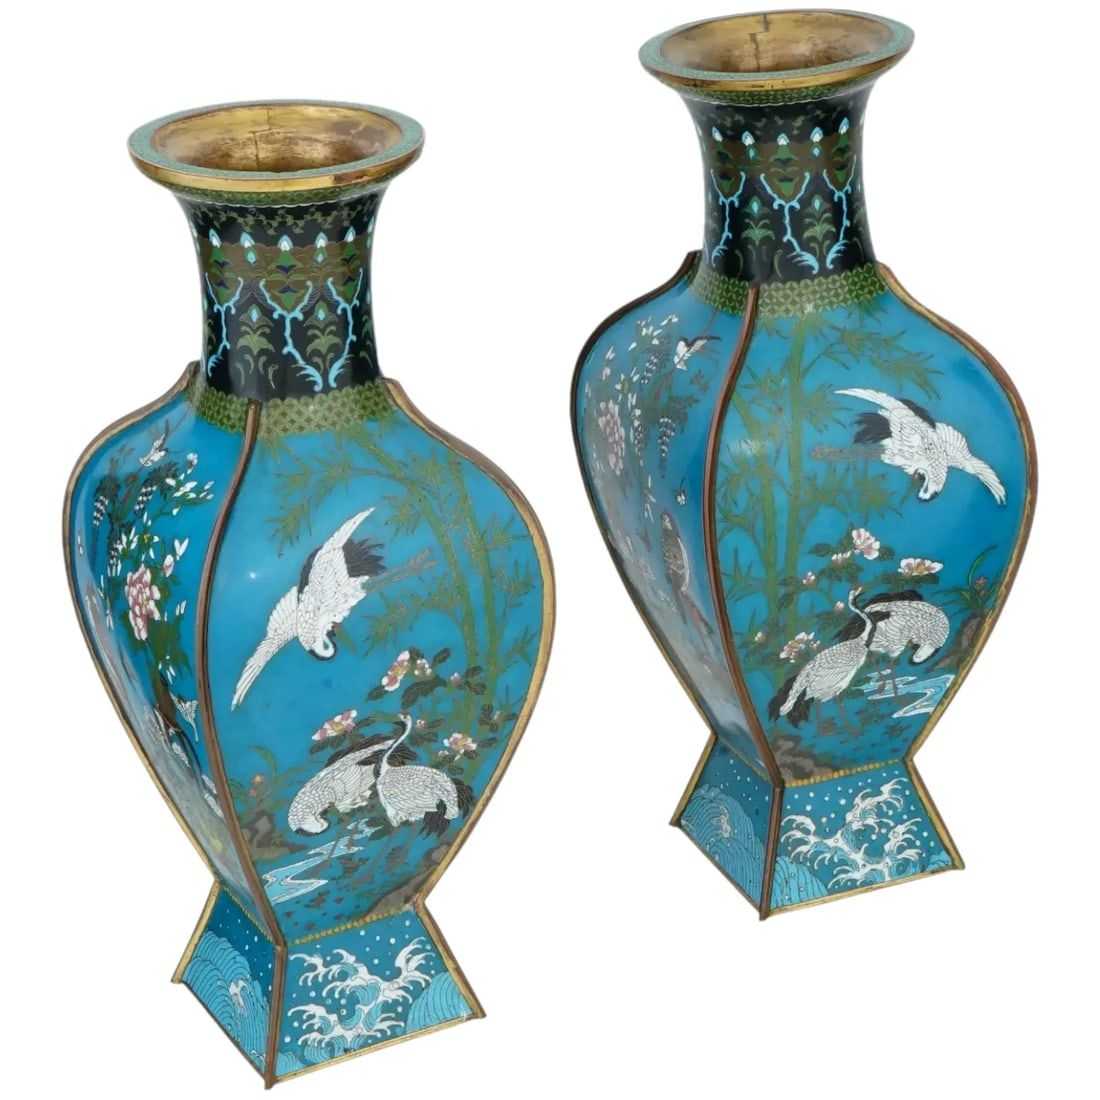 Circa-1880 pair of Japanese Meiji period facet cloisonné vases, estimated at $15,000-$18,000 at Jasper52.